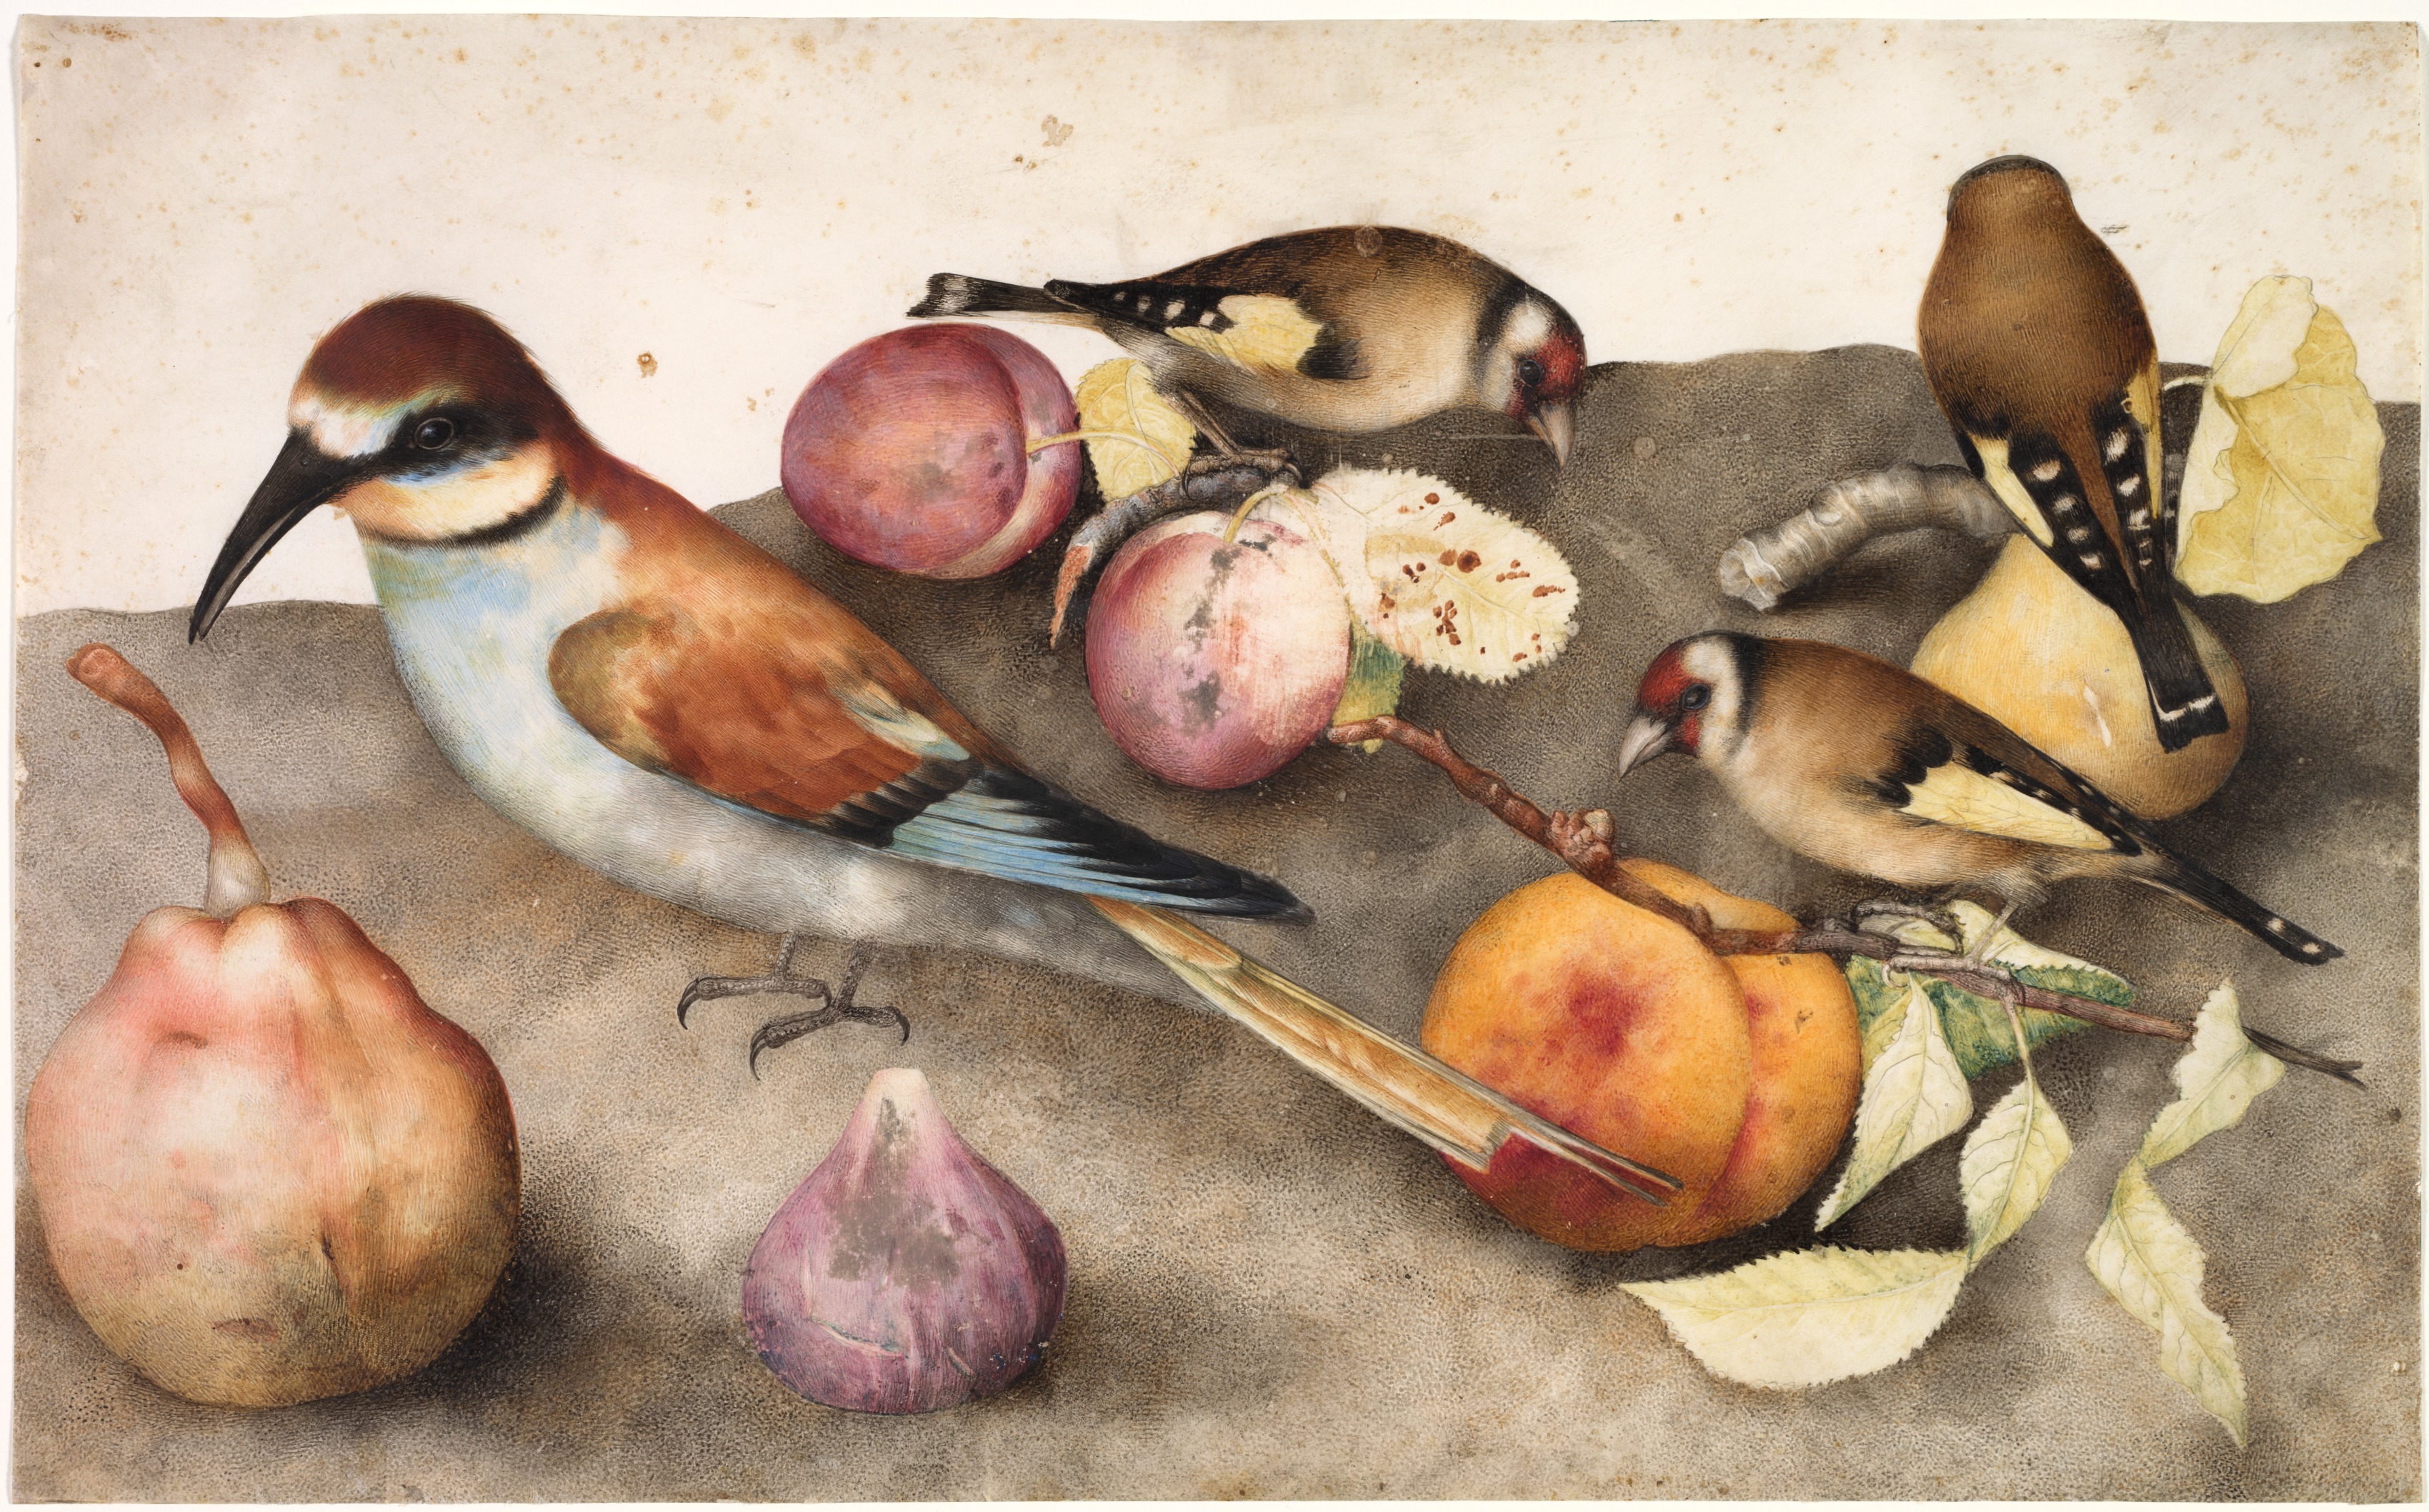 Натюрморт з пташками та фруктами by Giovanna Garzoni - 17-е сторіччя - 25.7 х 41.6 см 